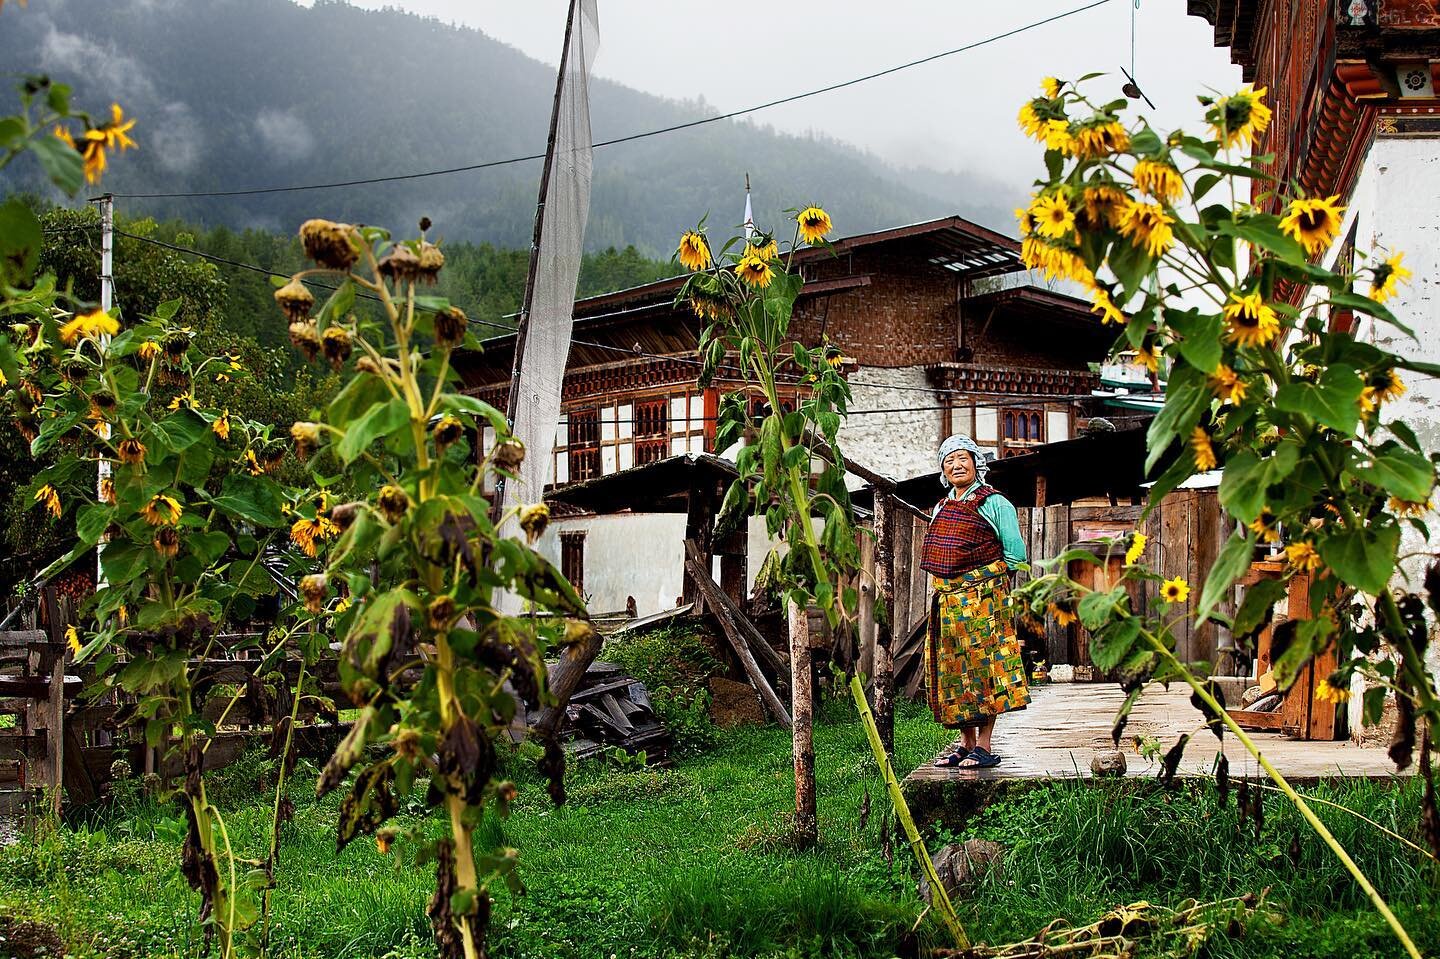 Chumey Village is a vibe 🌻 In Bhutan with @matthewrdesantis and @mybhutan 

#travelphotography #mybhutan #uncommonheroes #austinphotographer #travelphotographer #portraitphotographer